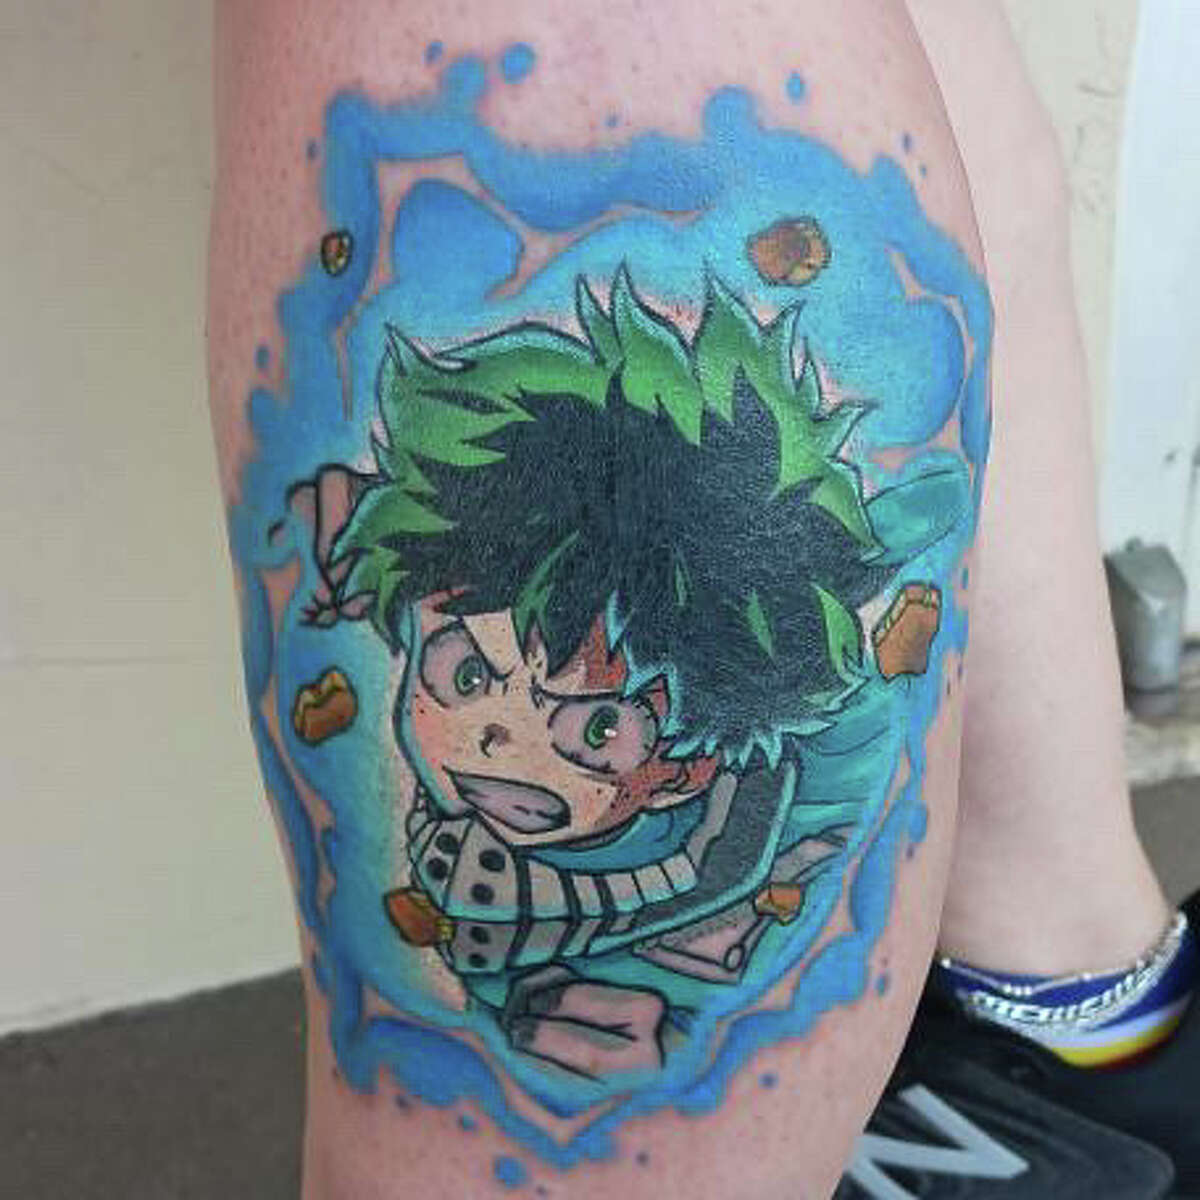 No digital ink here  Yokohama tattoo parlor churning out amazing anime art   SoraNews24 Japan News